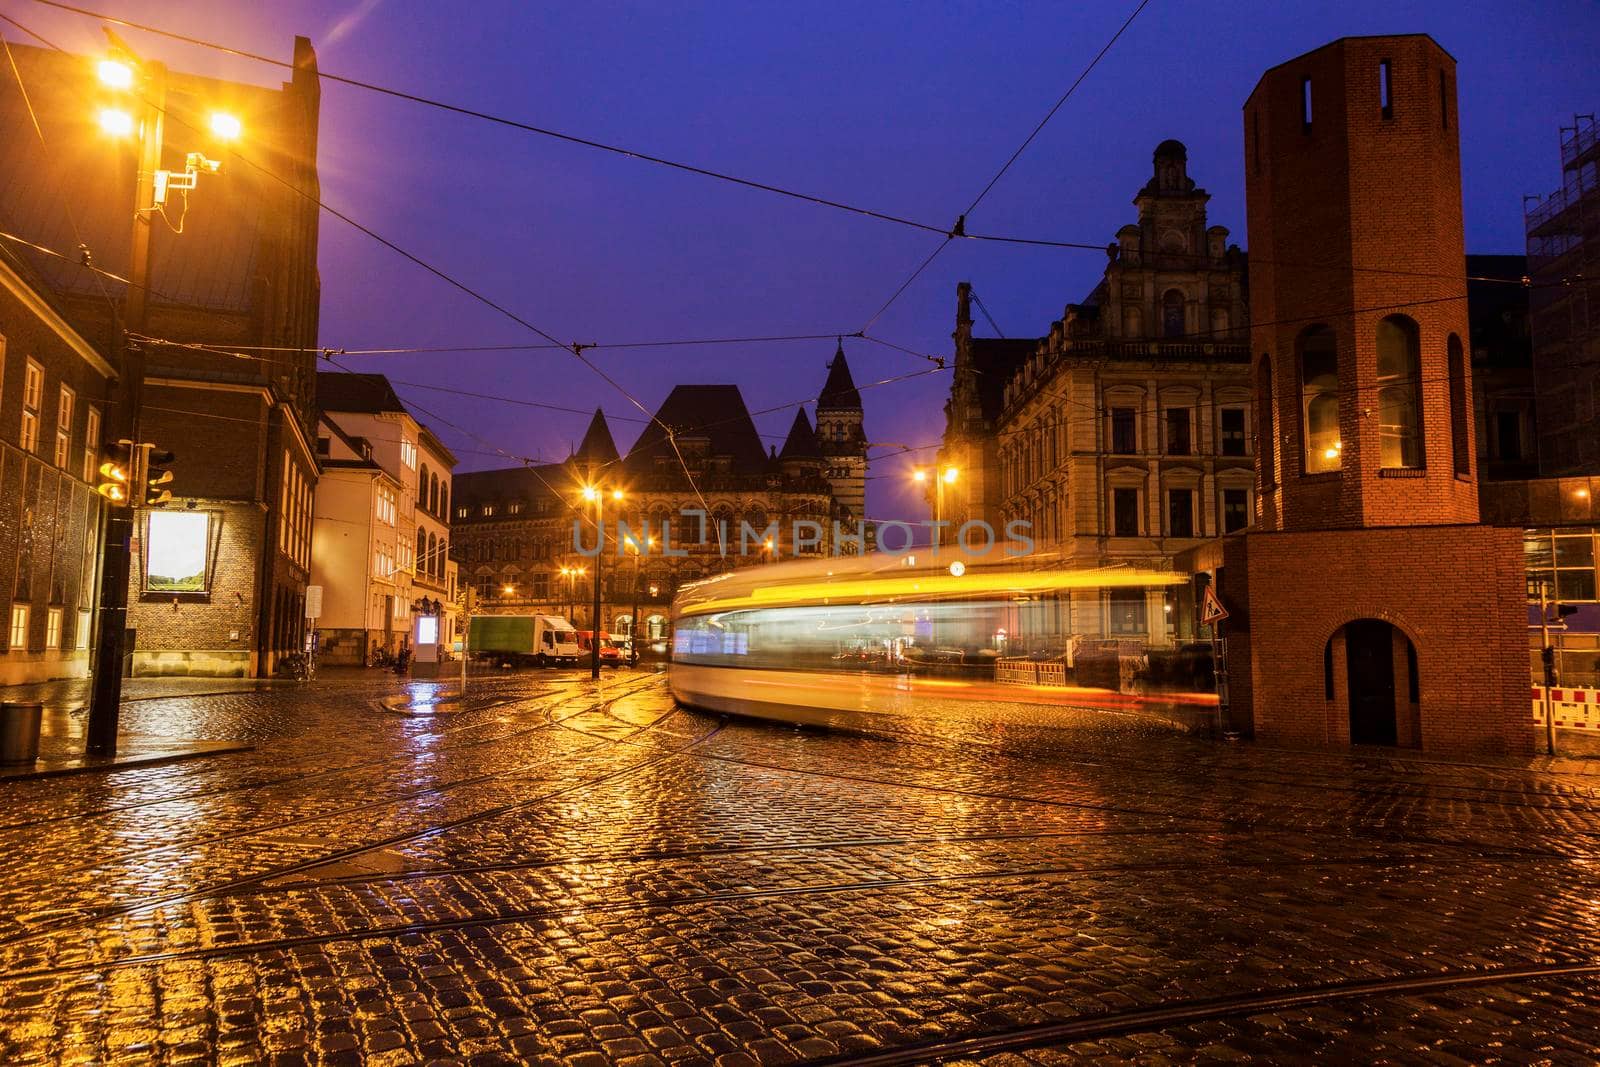 Rainy morning in the center of Bremen by benkrut